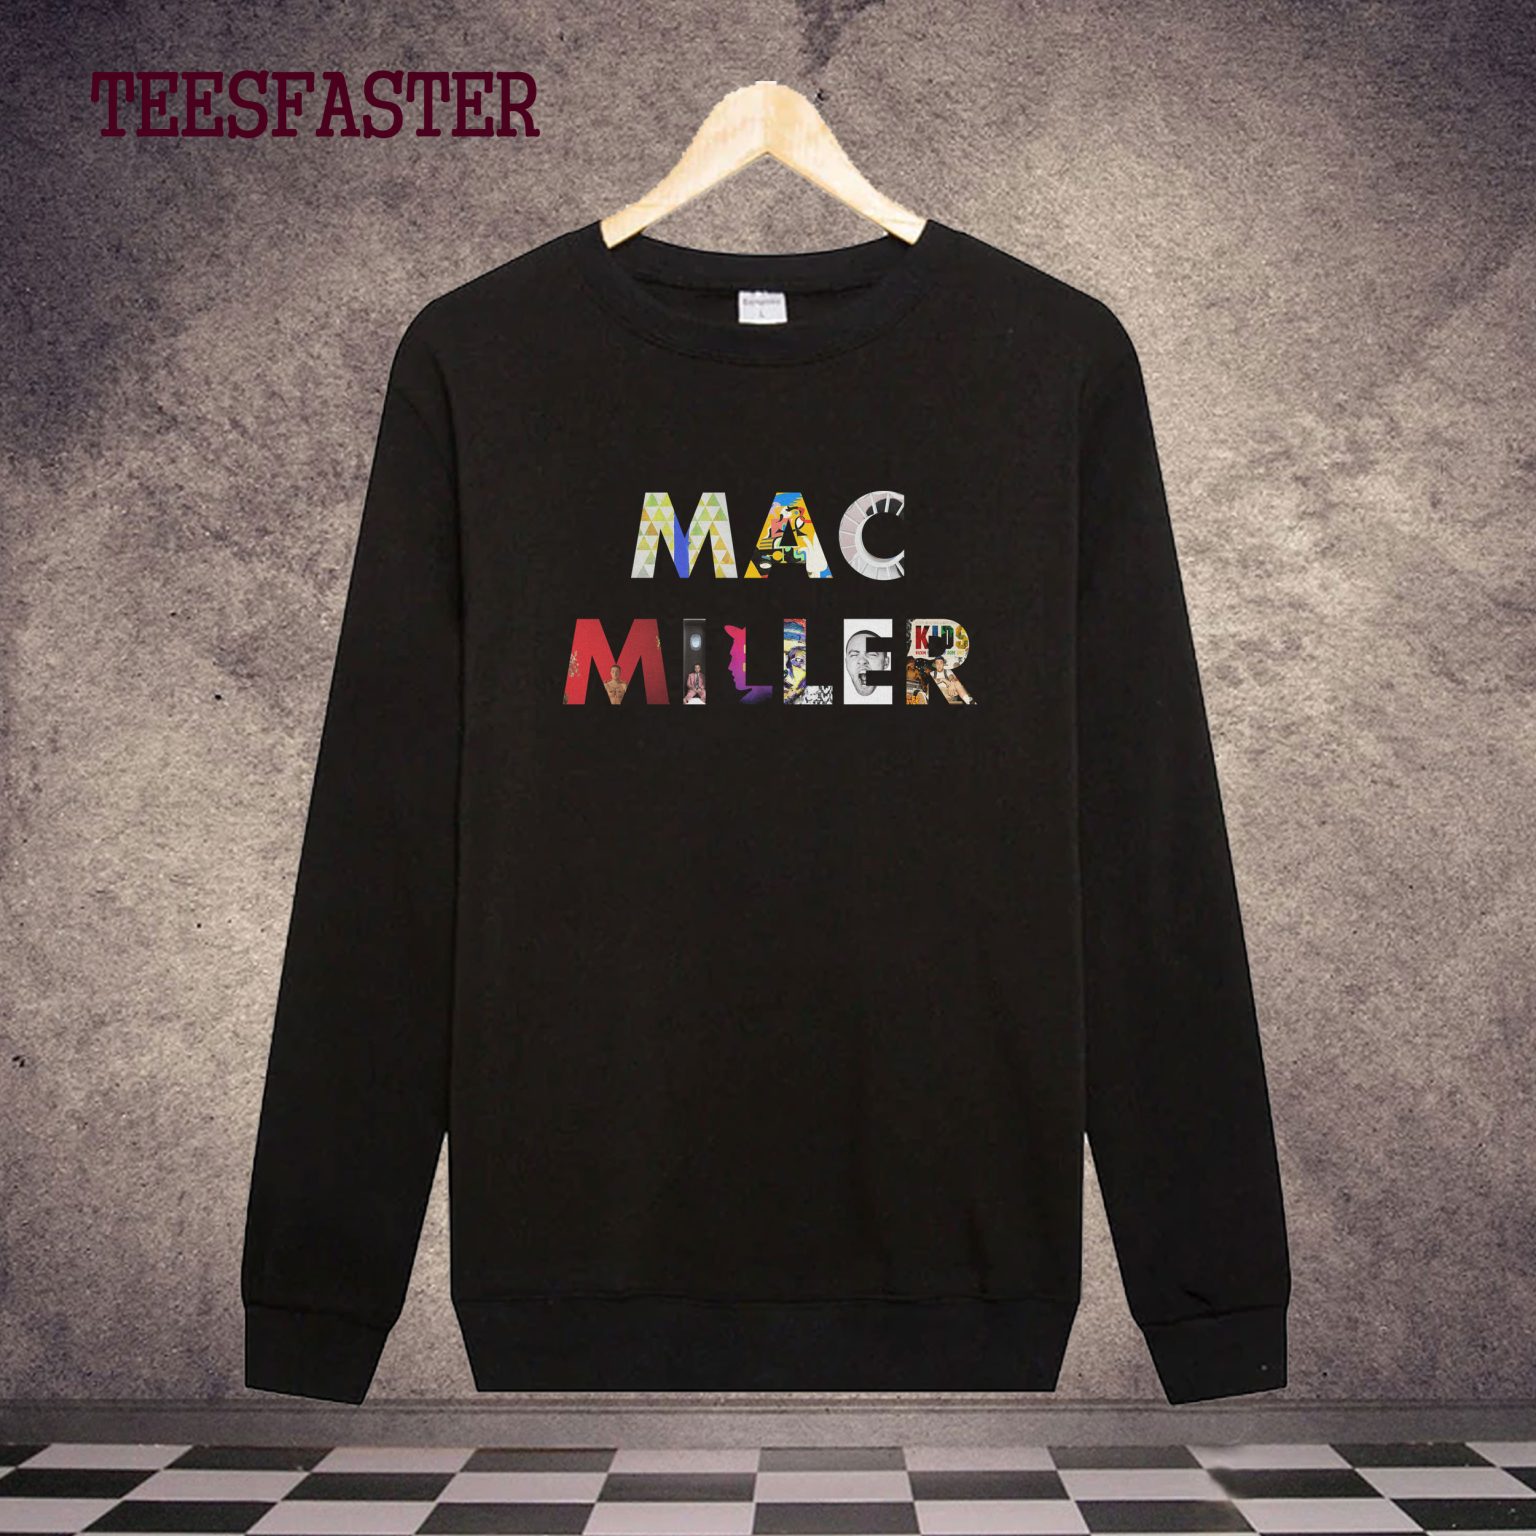 Mac Millerr Sweatshirt